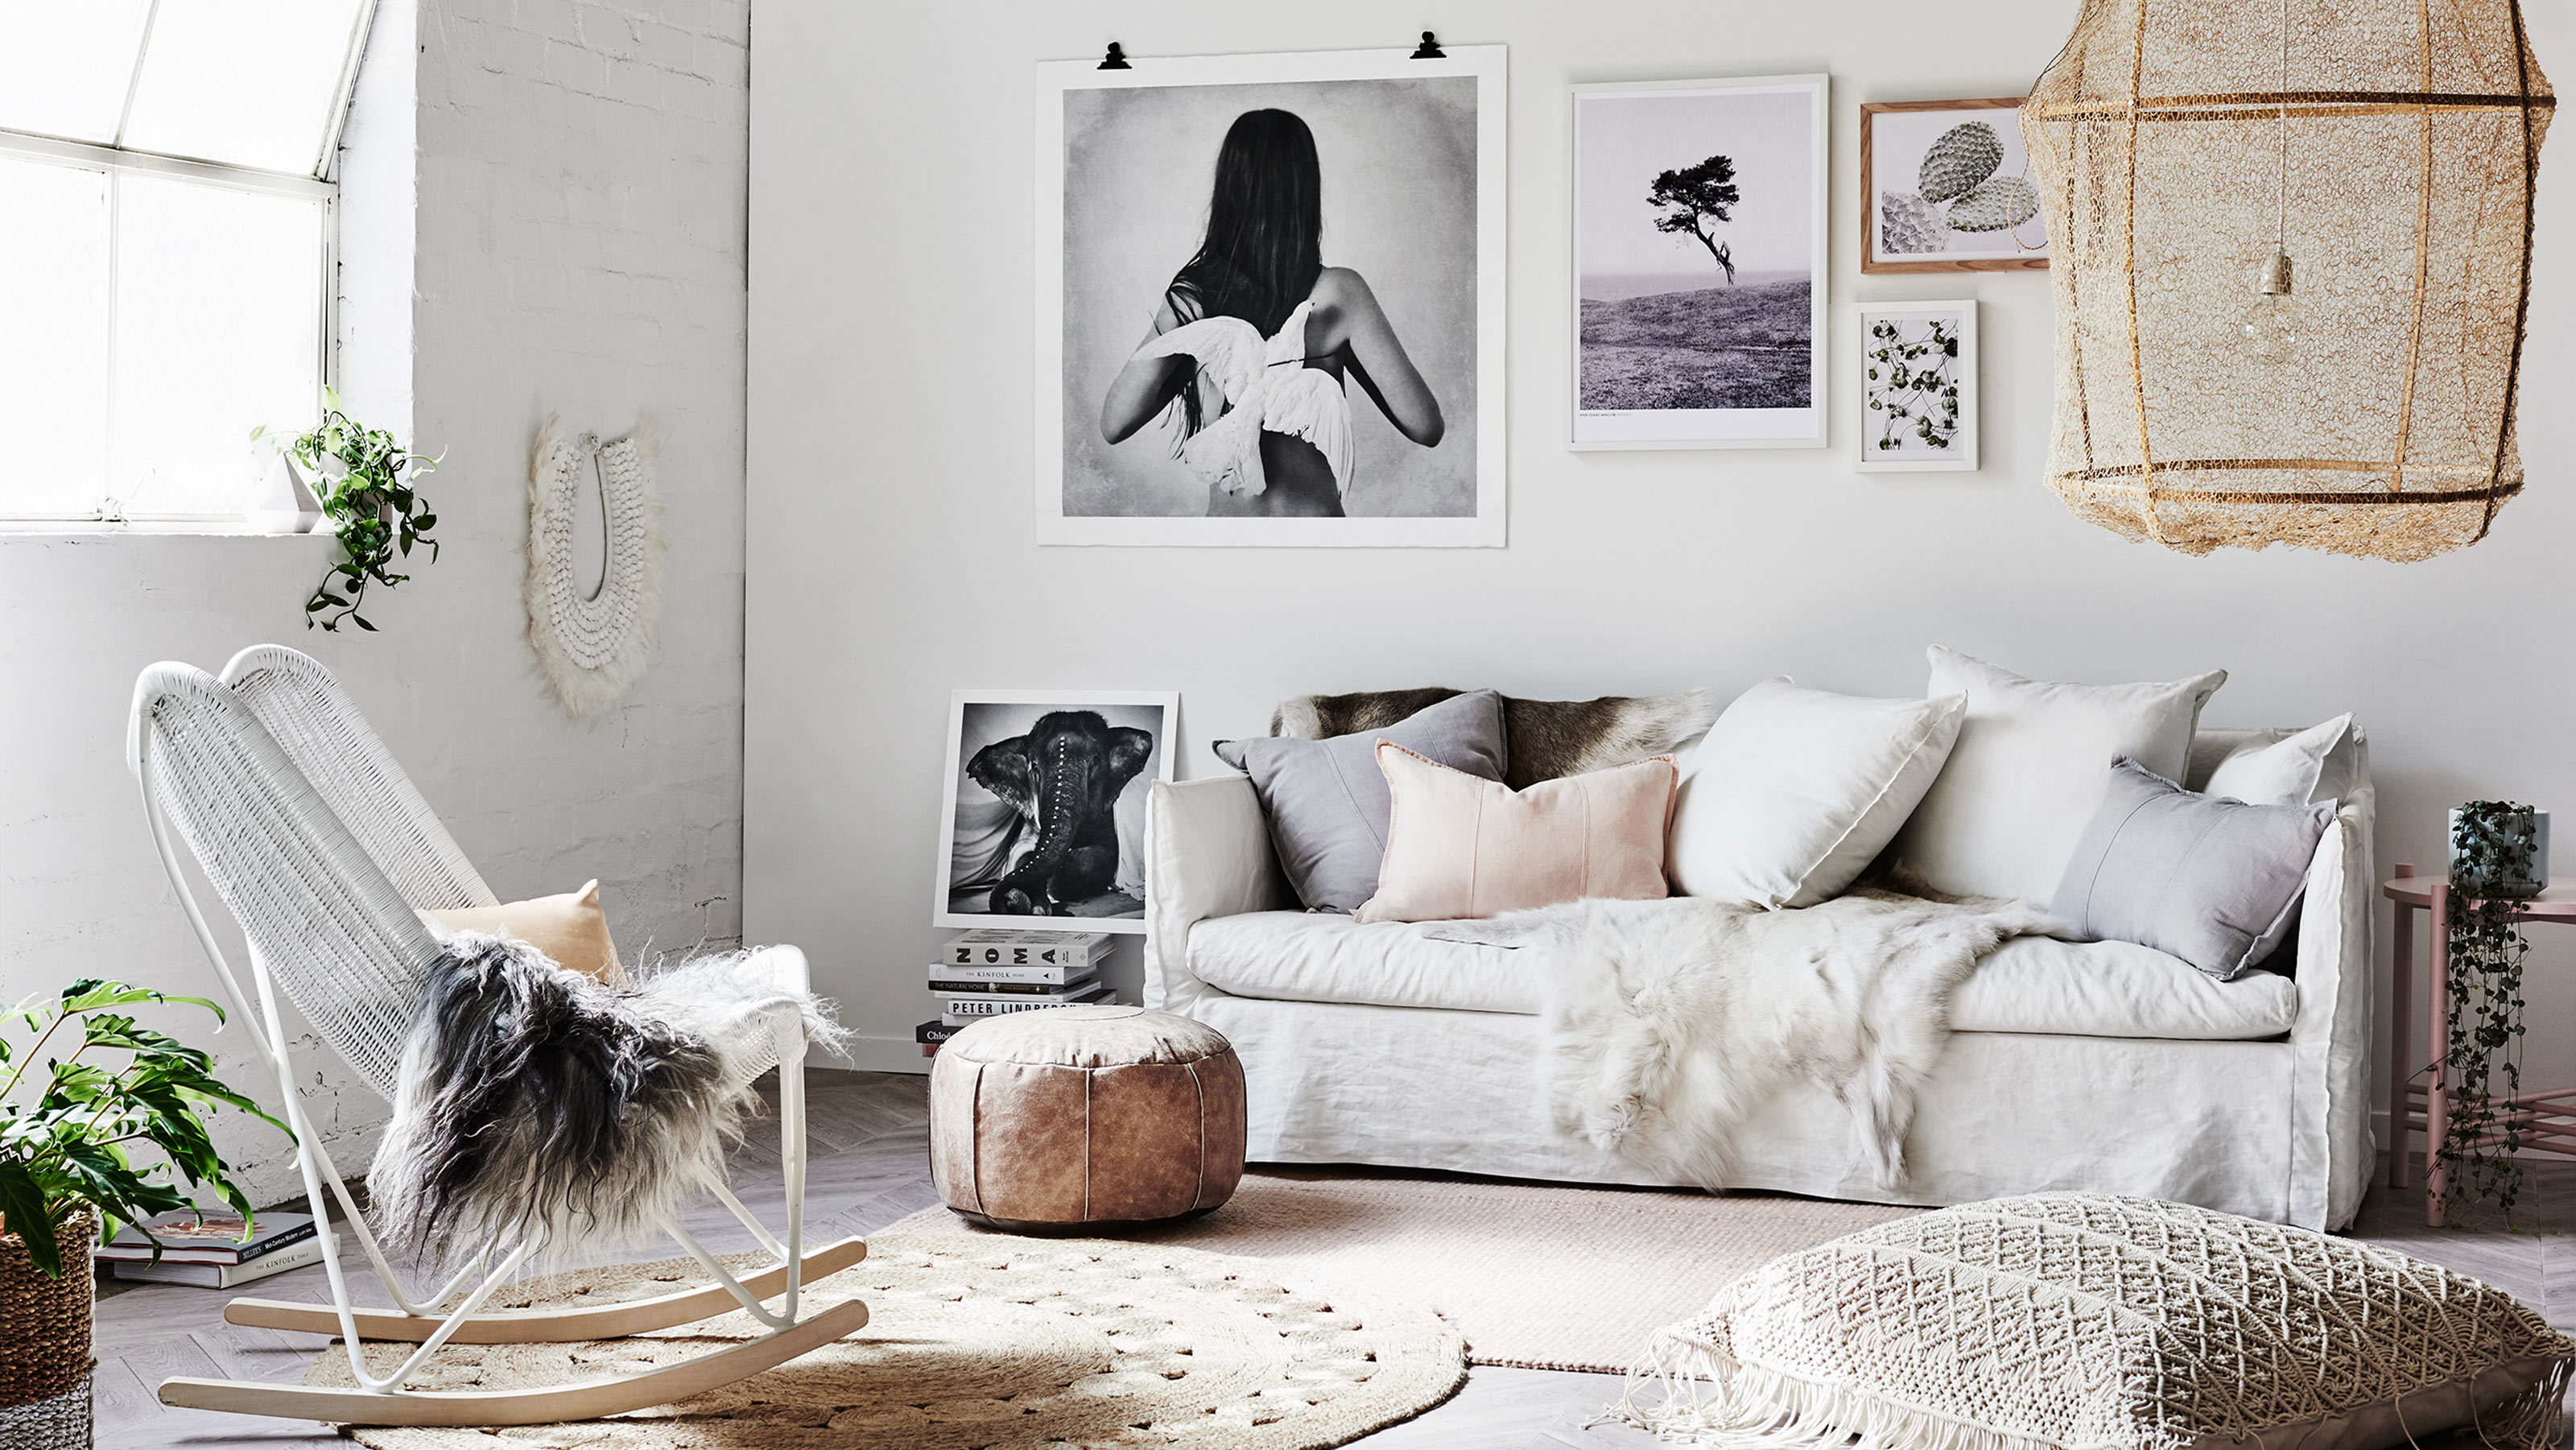 Bohemian living room ideas – 19 inspiring ways to embrace a modern boho look